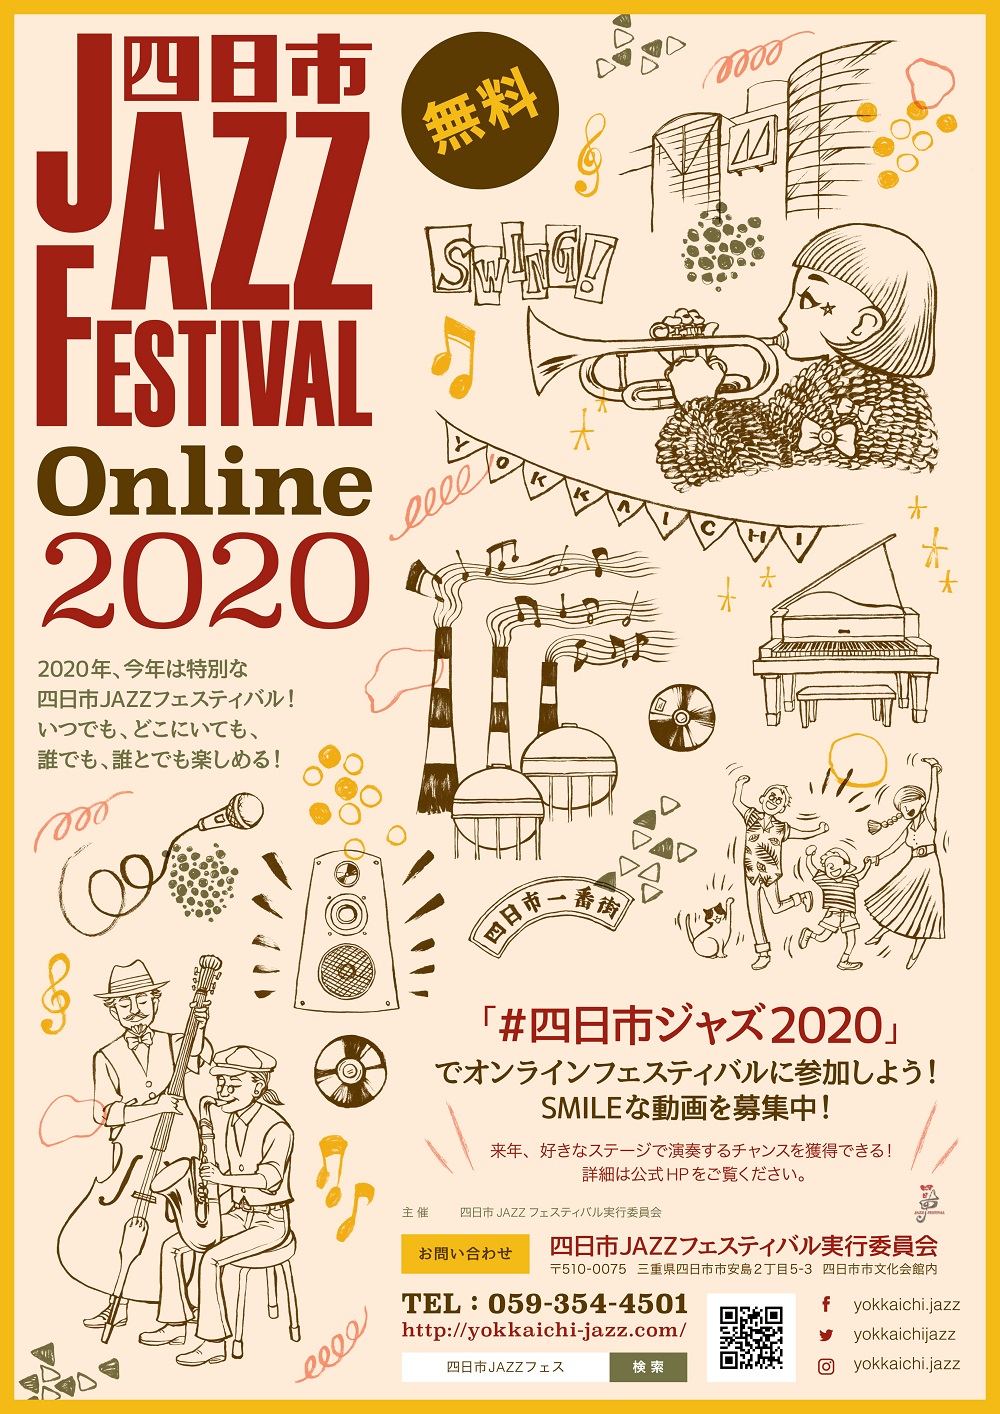 四日市JAZZ FESTIVAL Online 2020